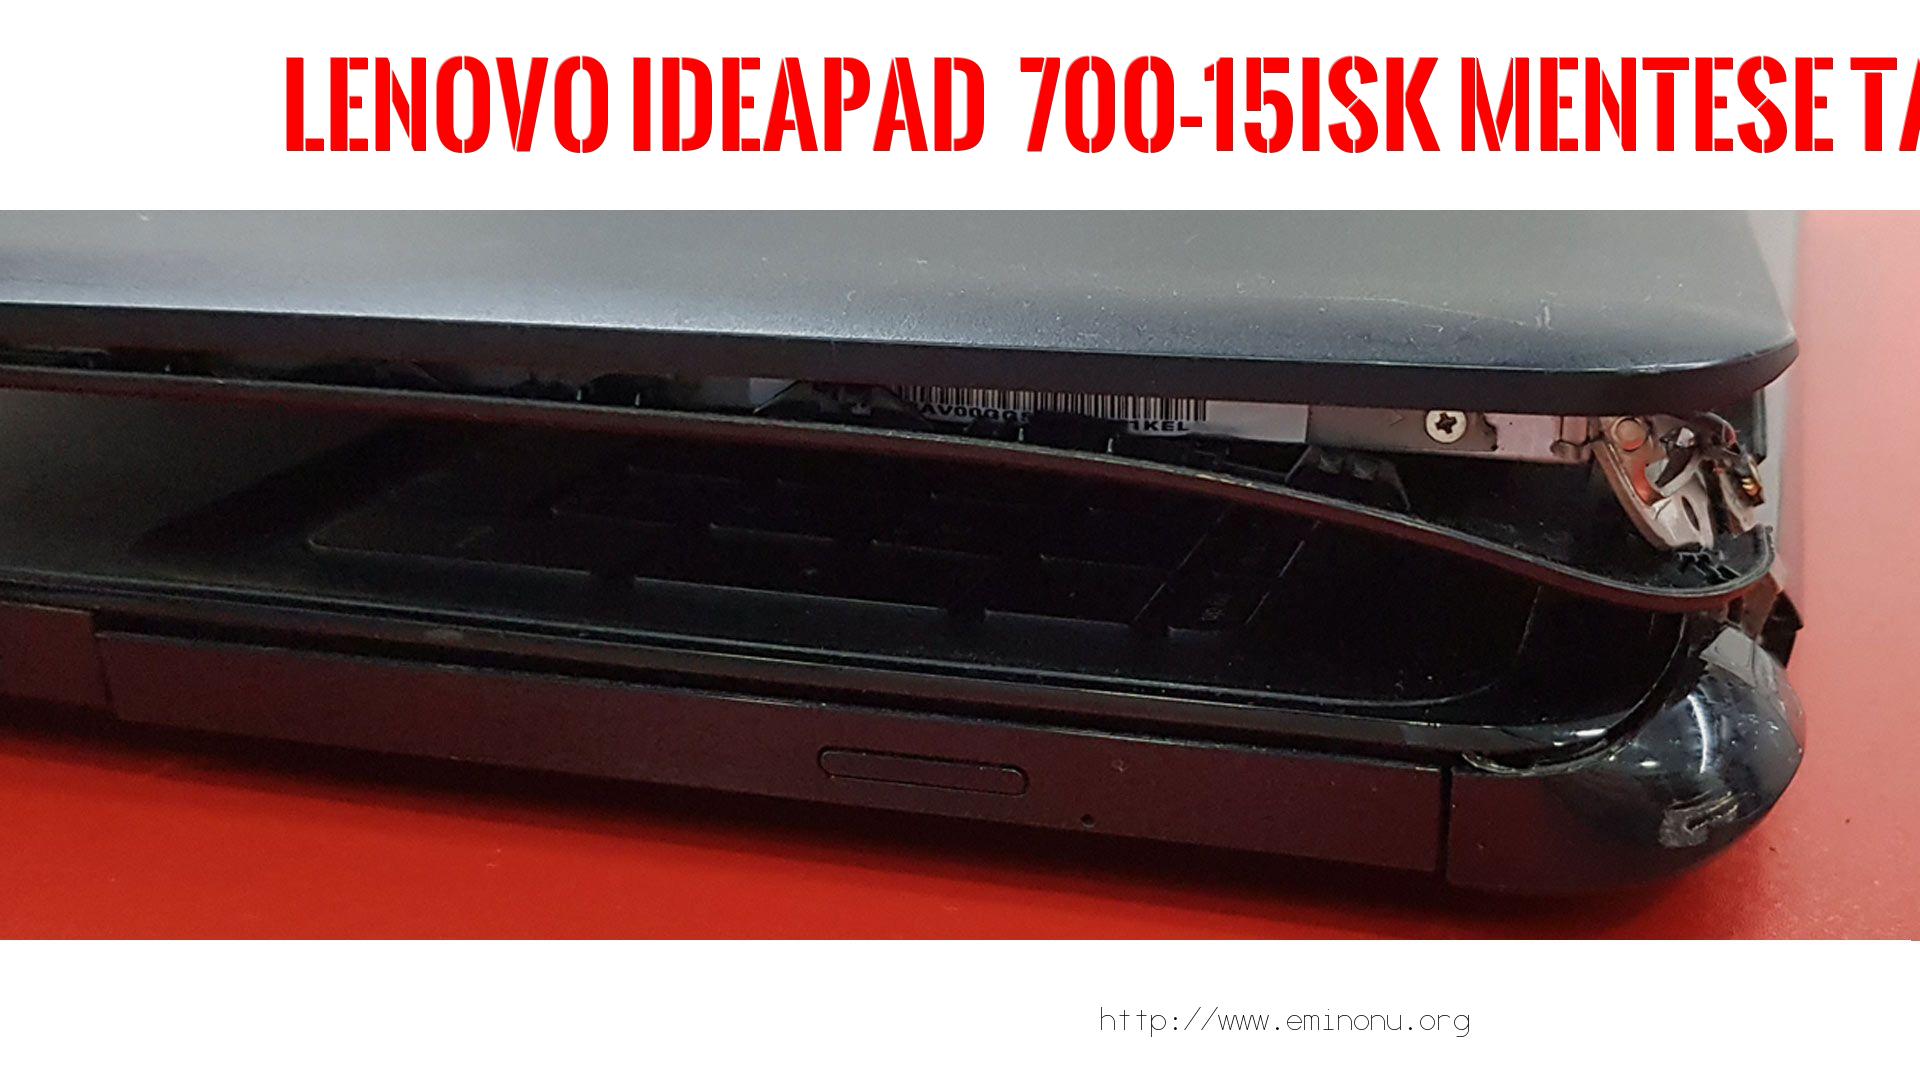 Menteşe Tamiri  Lenovo  İdeapad deapad 700-15ısk  MENTEŞE TAMİRİ